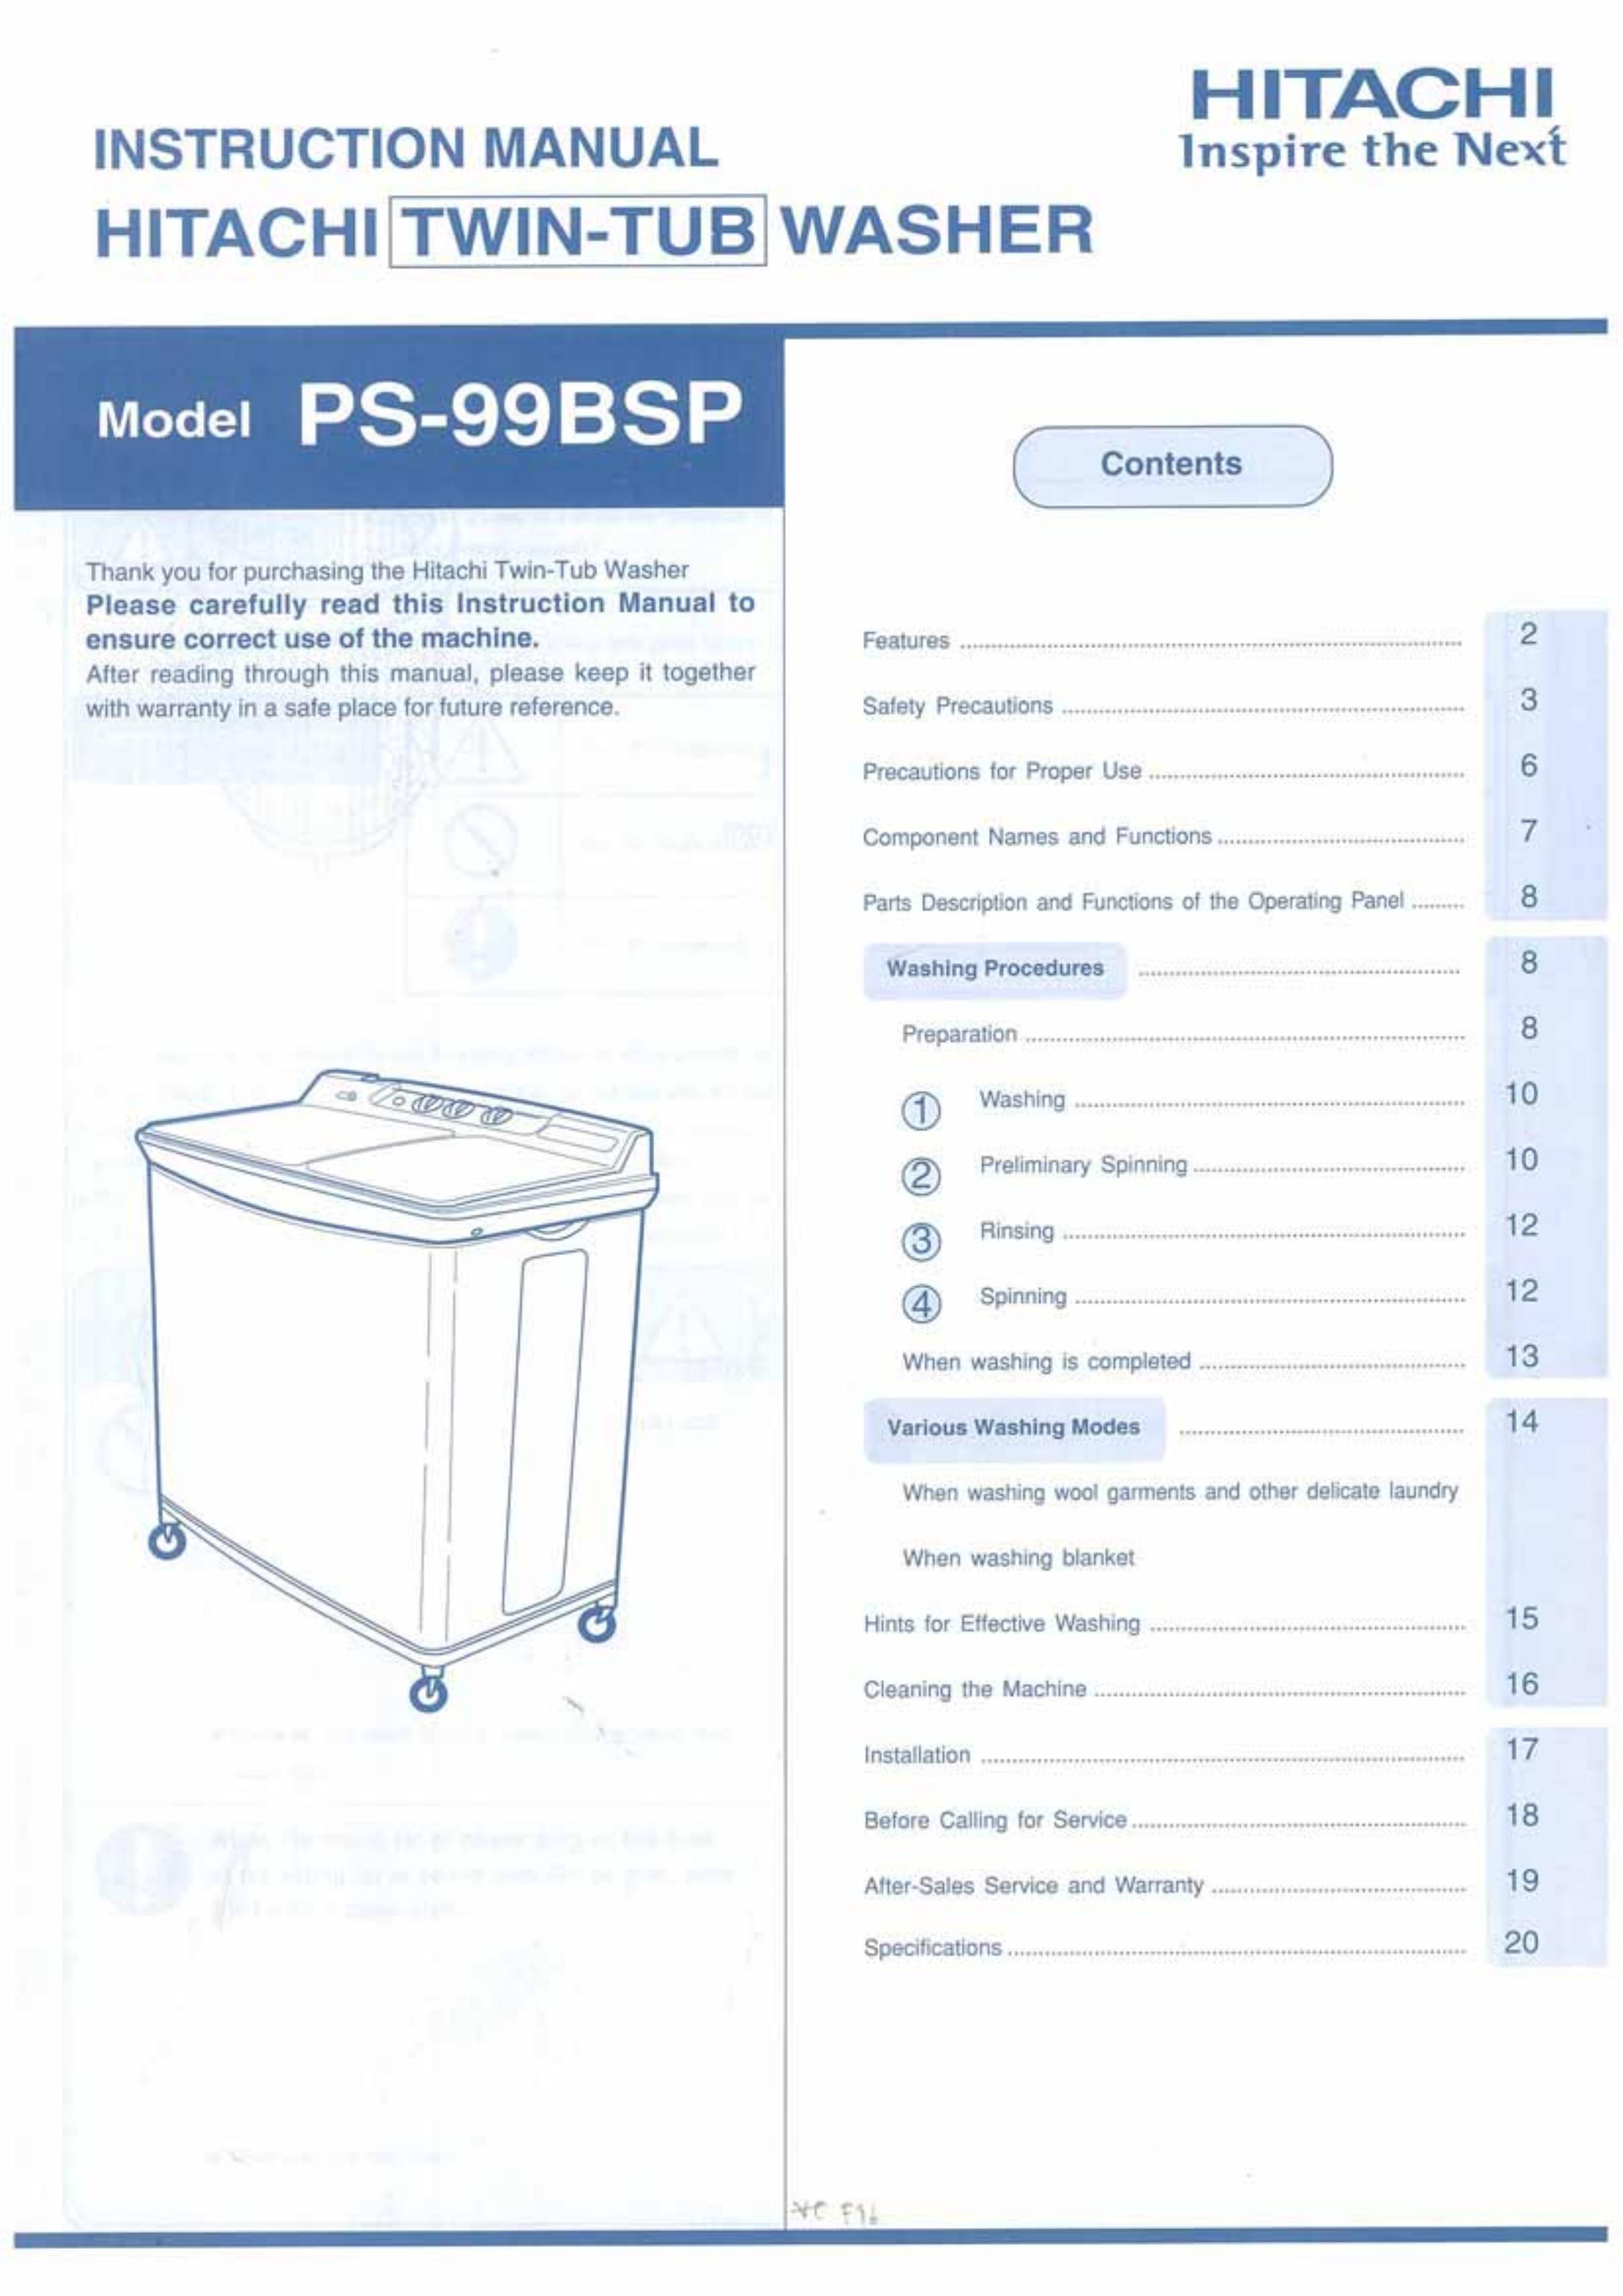 Hitachi ps-99bsp Washer User Manual